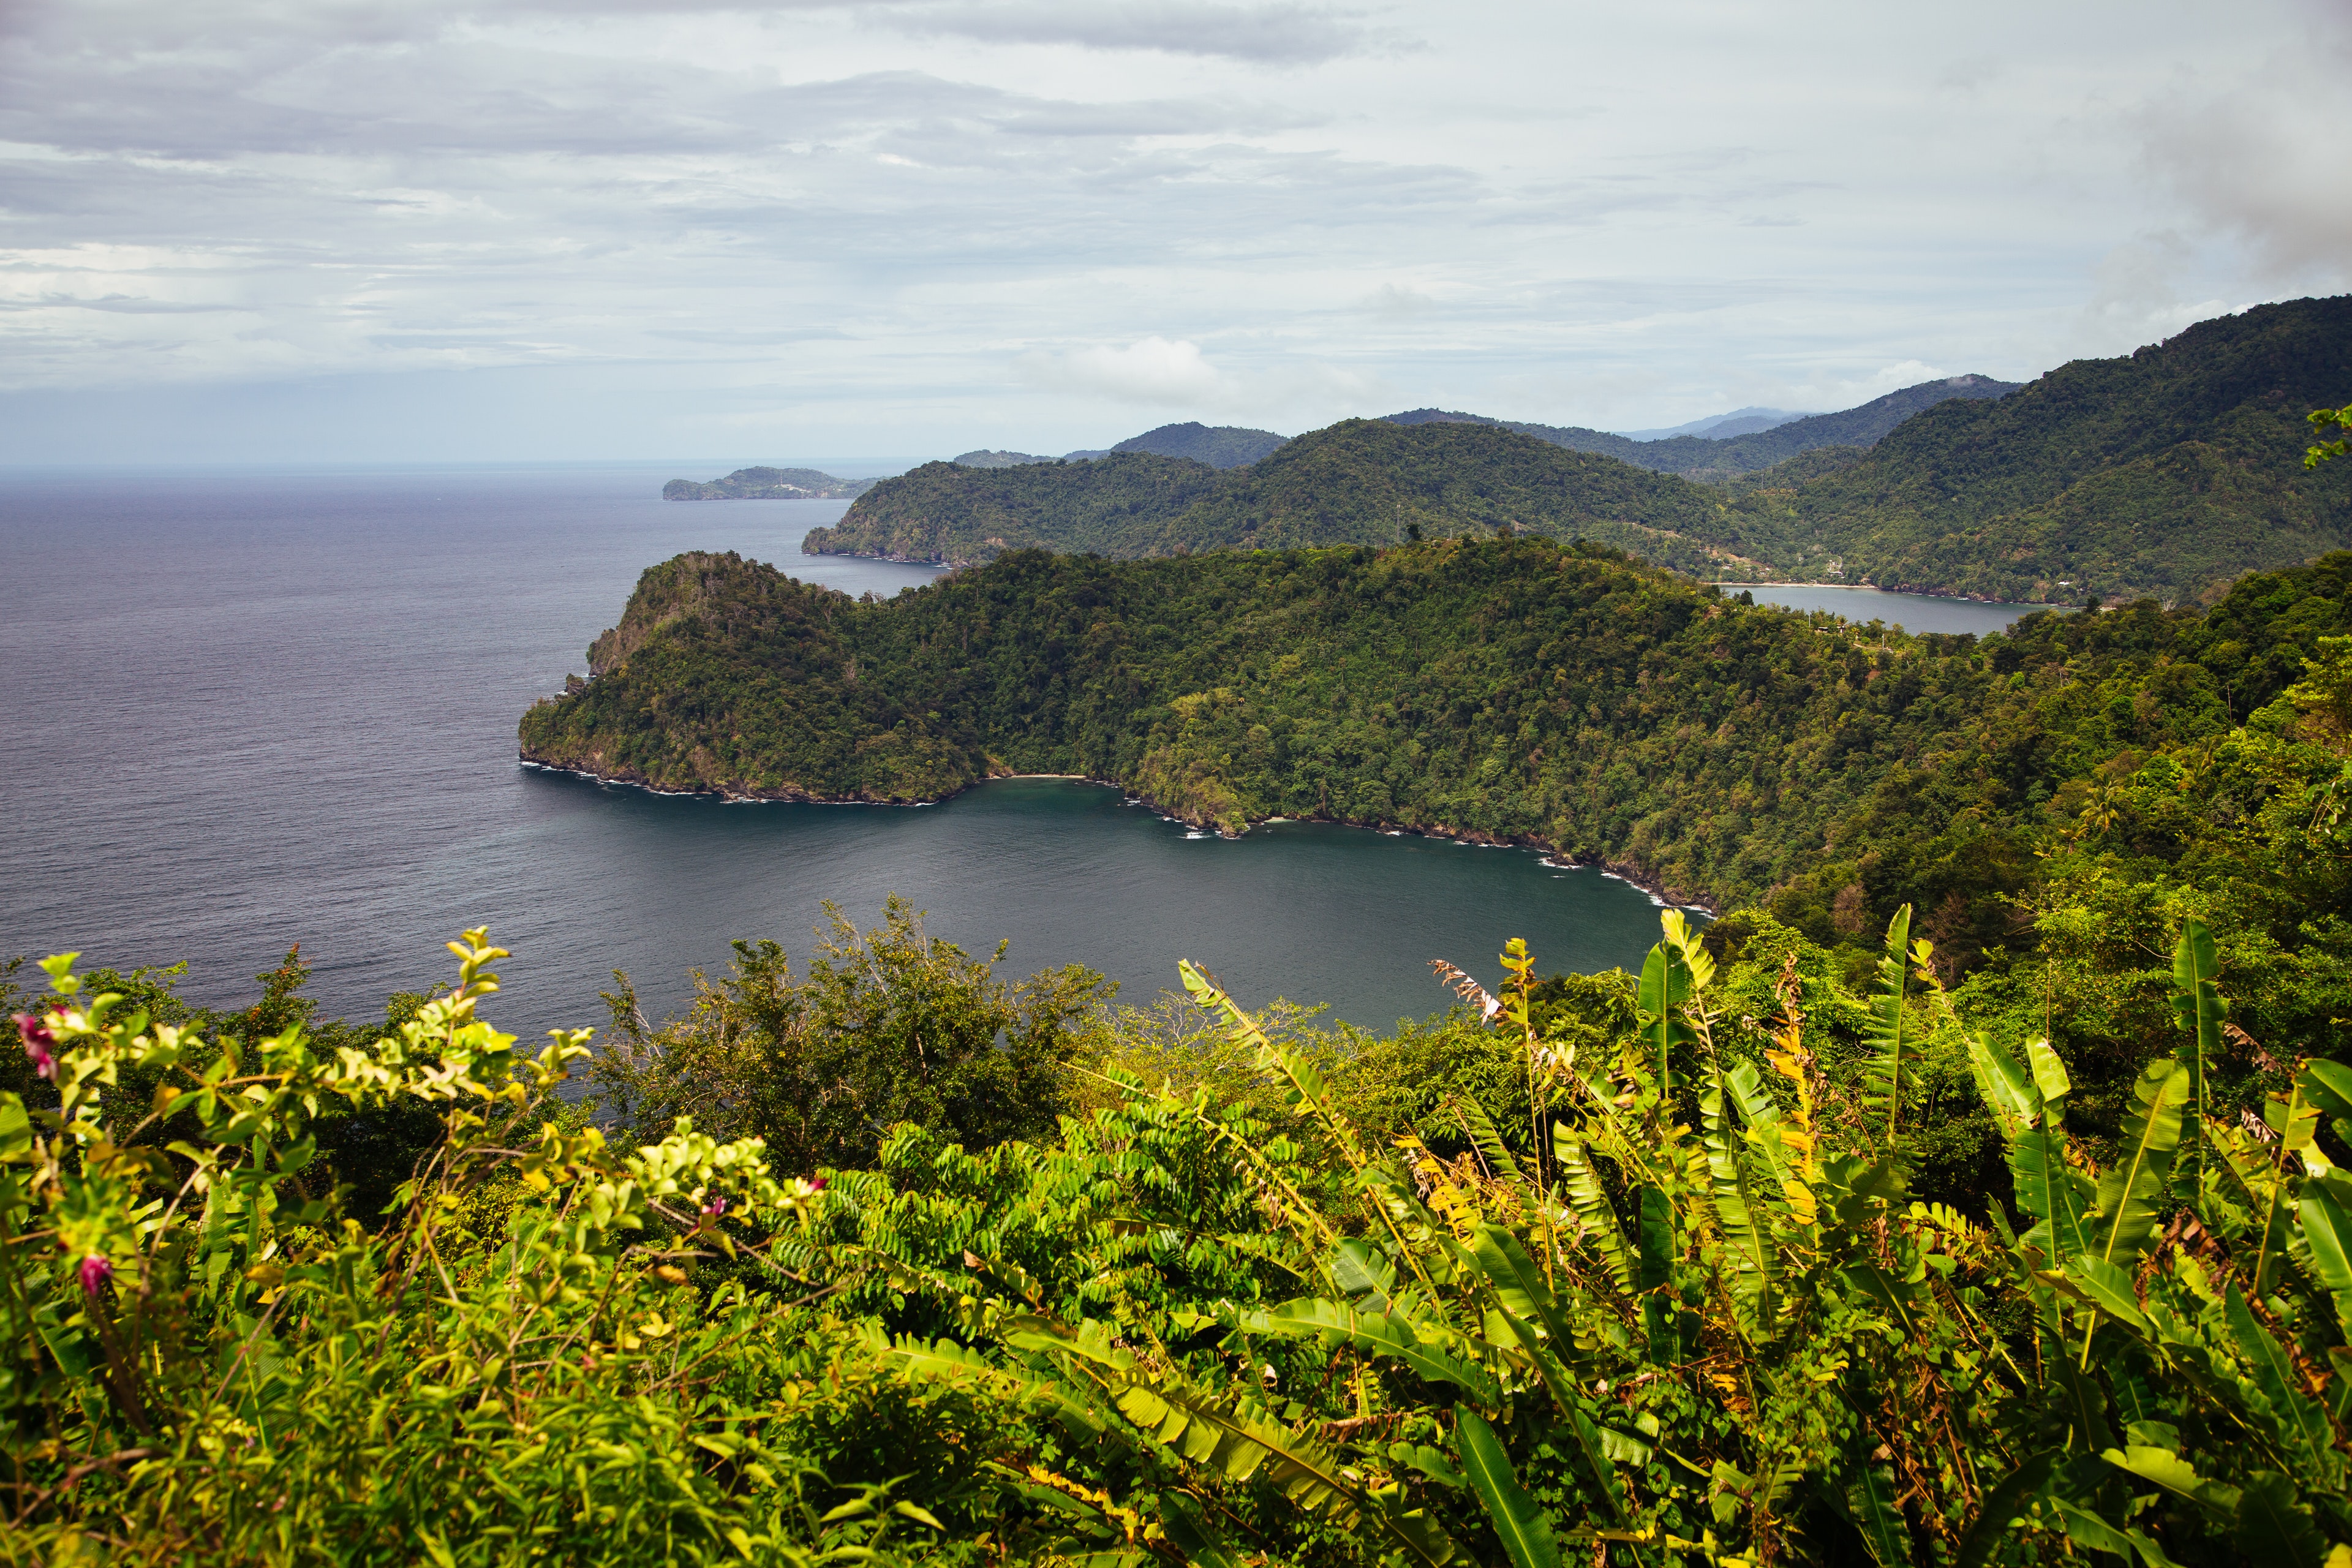 Photo of beautiful Trinidad and Tobago, Nicholas Pooran's home country